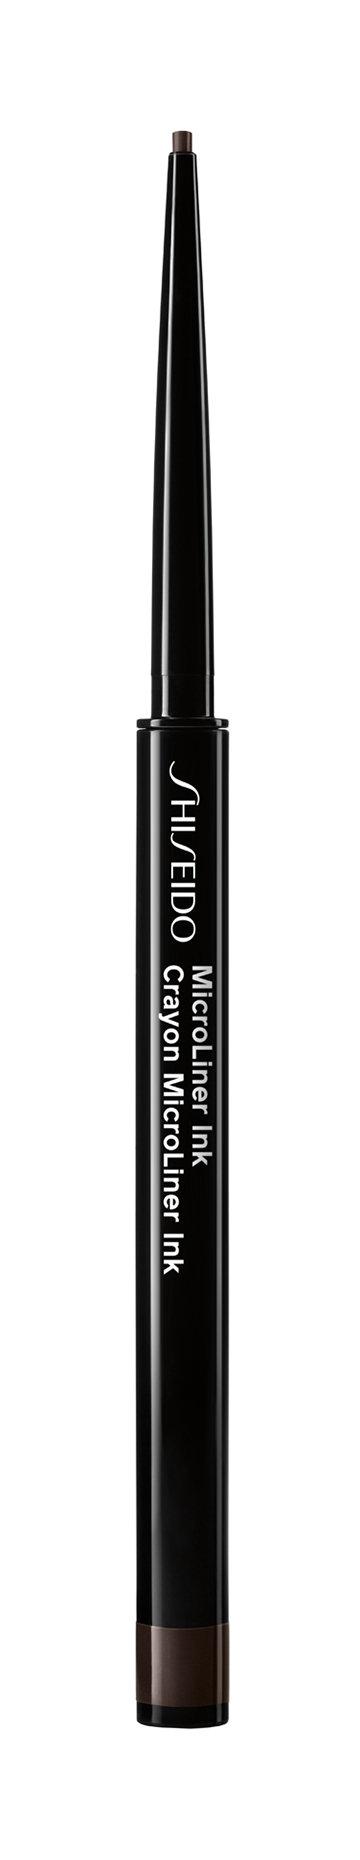 Карандаш для глаз Shiseido Microliner Ink №02 Brown 0,08 г shiseido тонкая подводка карандаш для глаз microliner ink